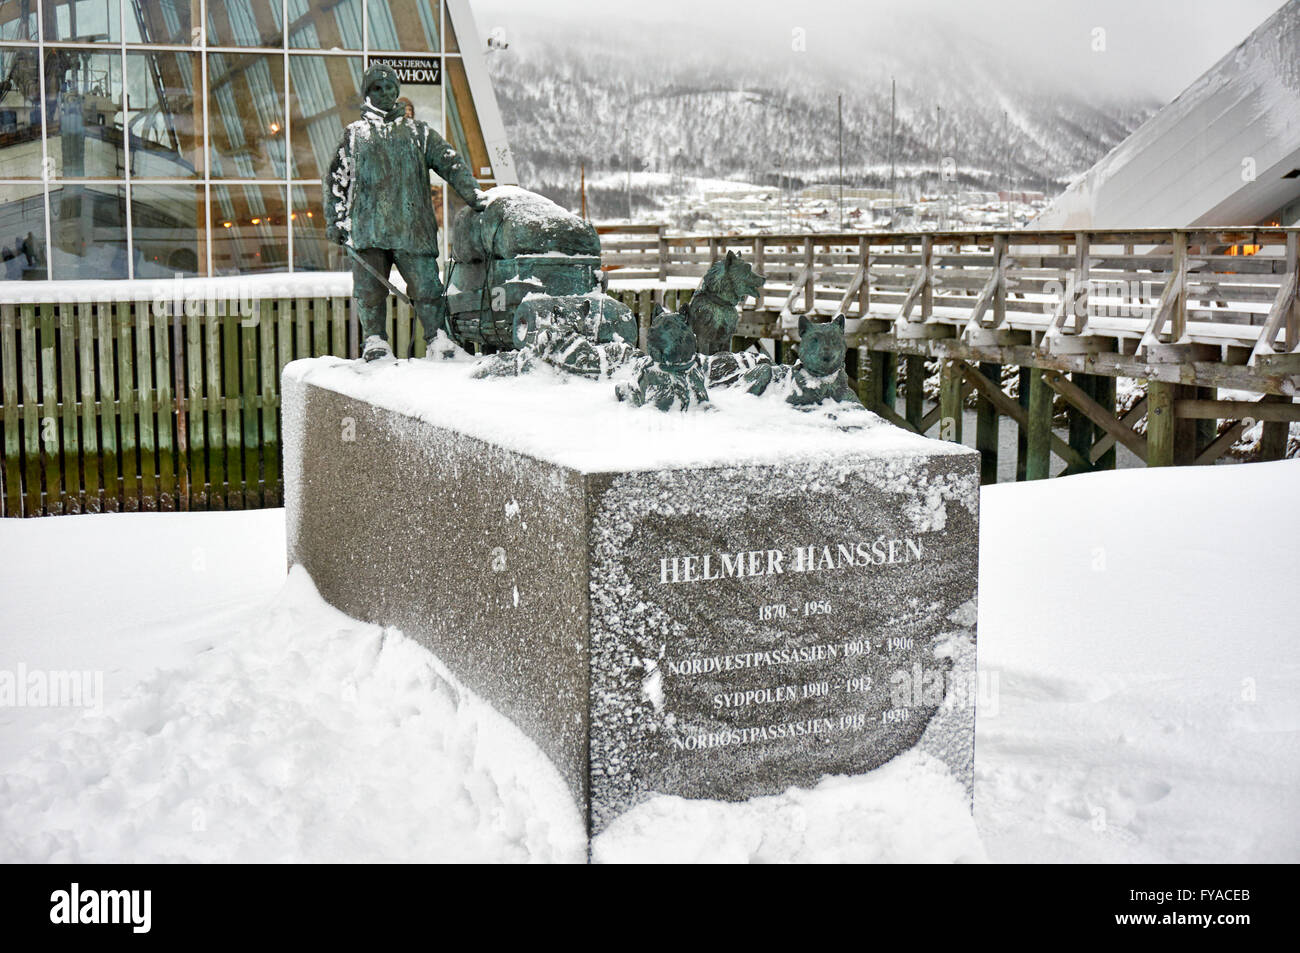 Coperte di neve memoriale di Arctic explorer Helmer Hanssen, Tromsø, Troms, Norvegia, Europa Foto Stock